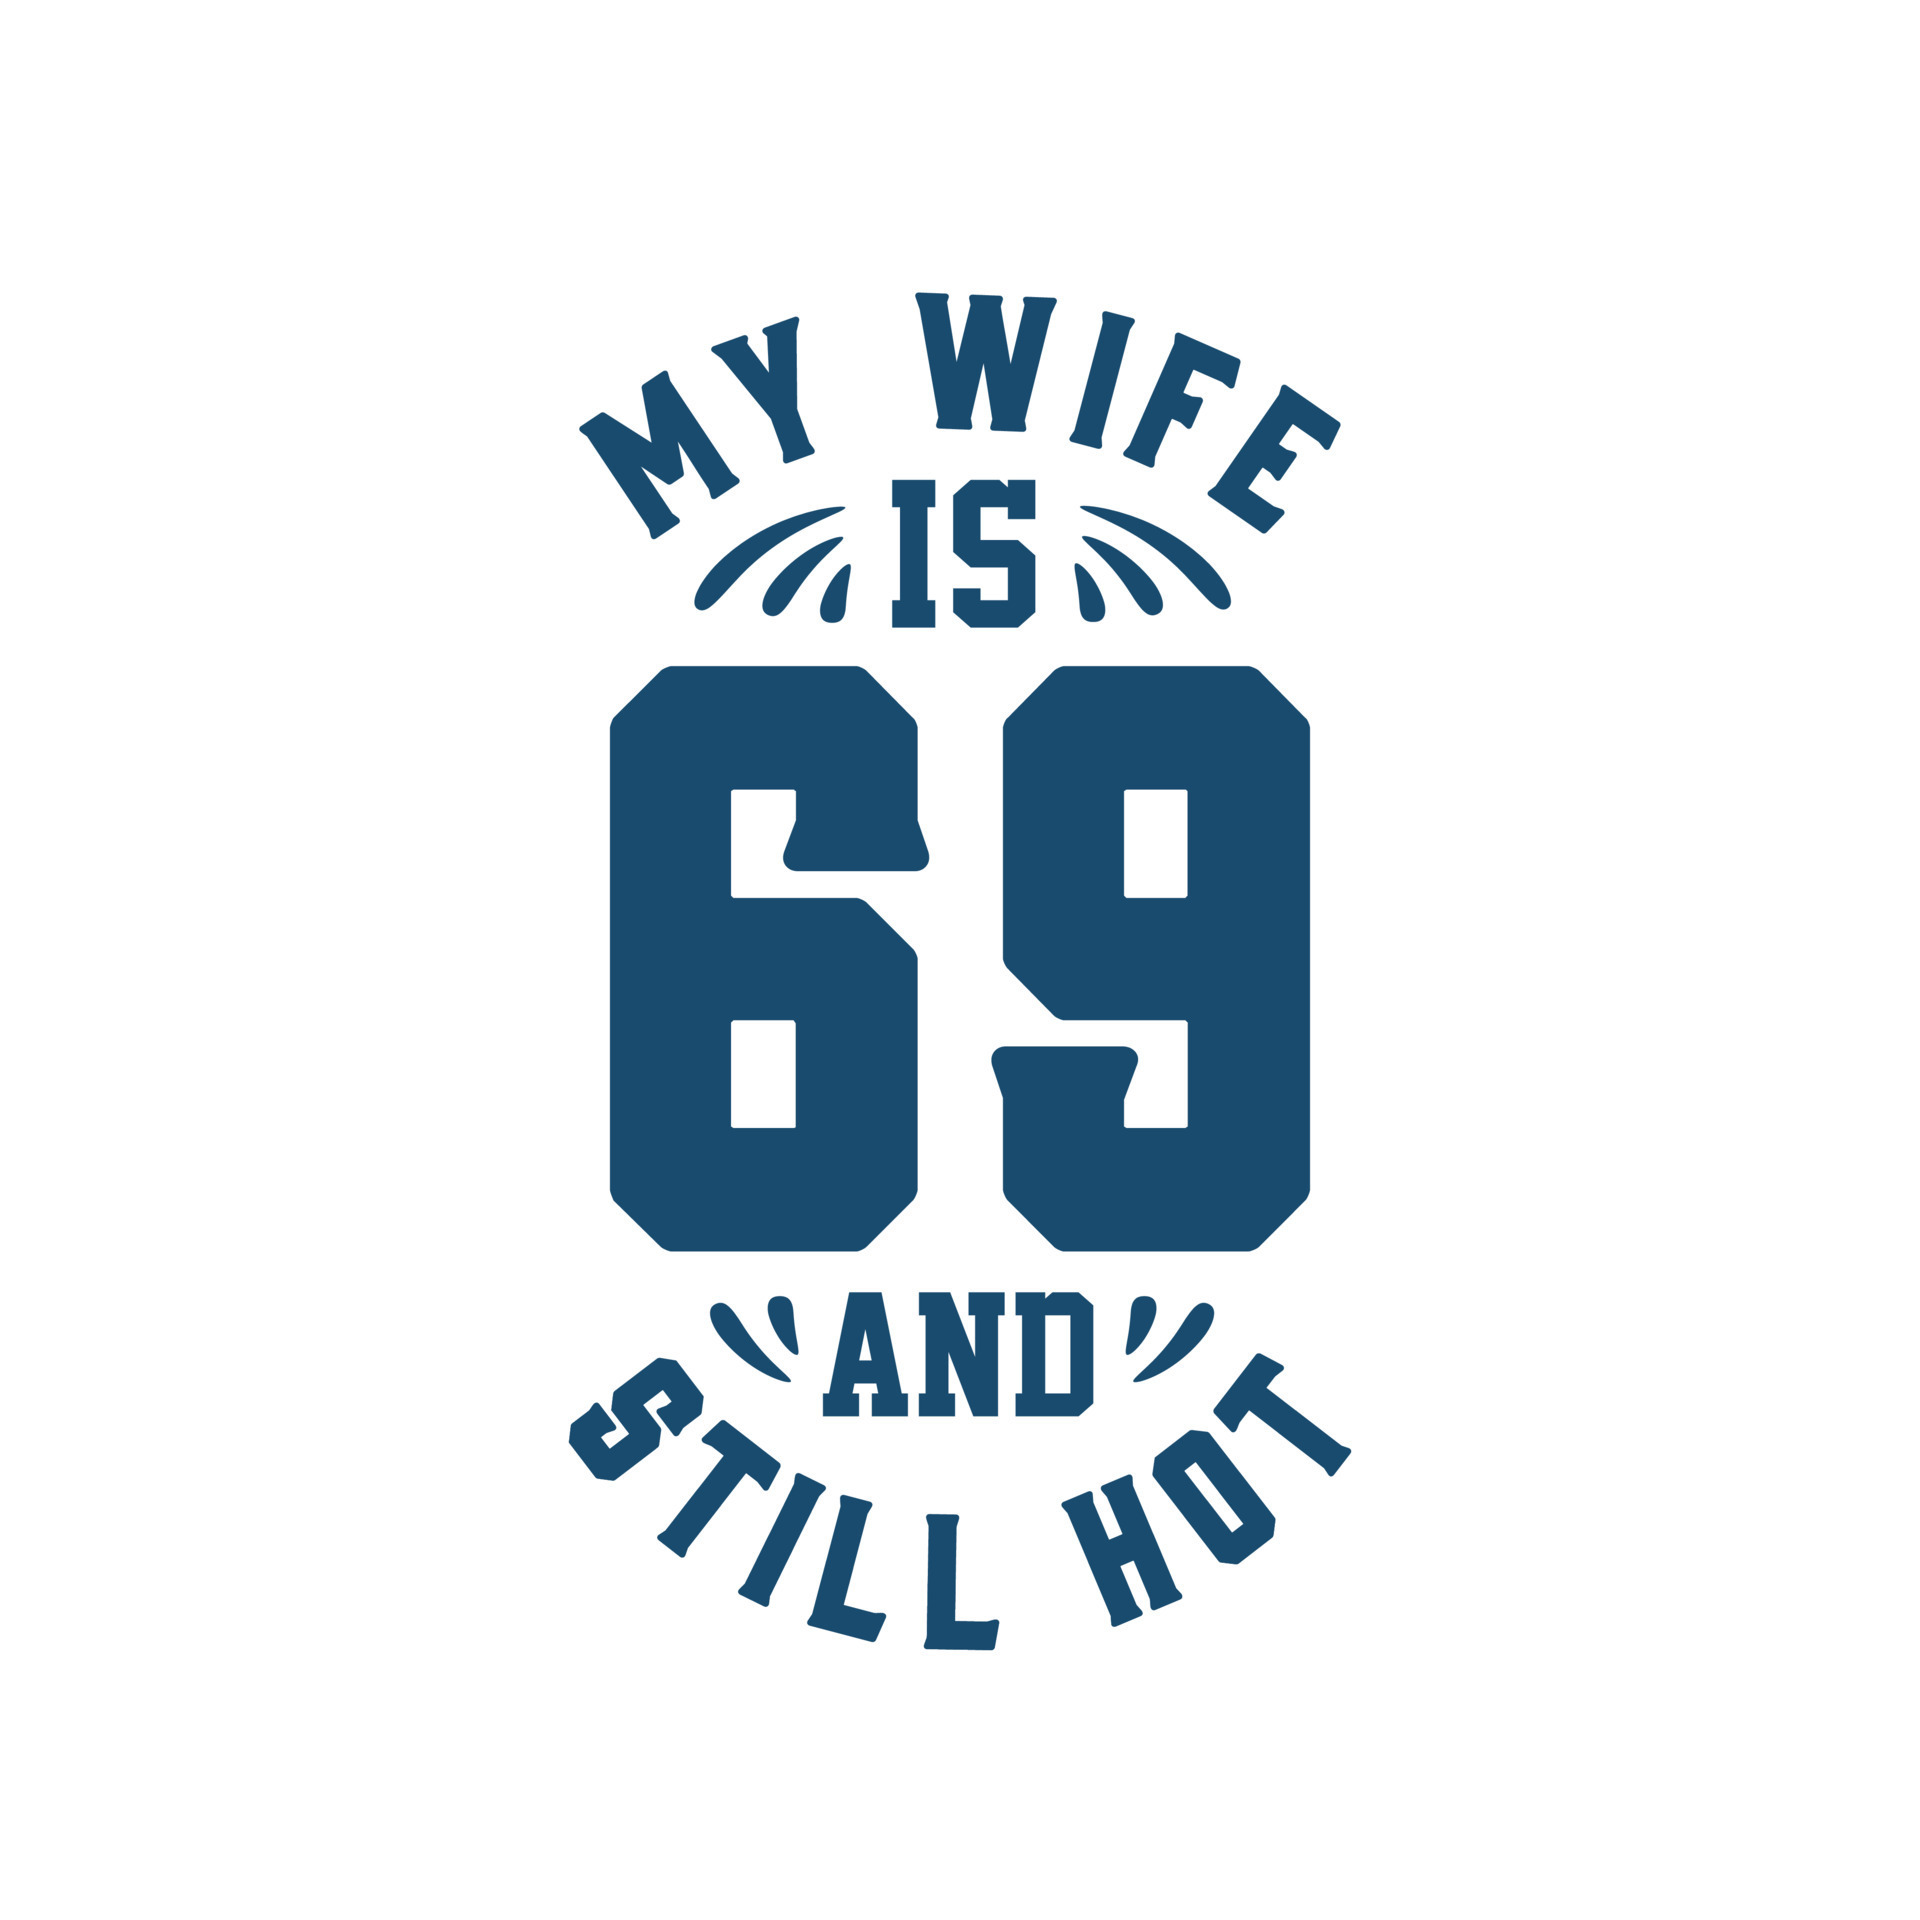 69 com a esposa